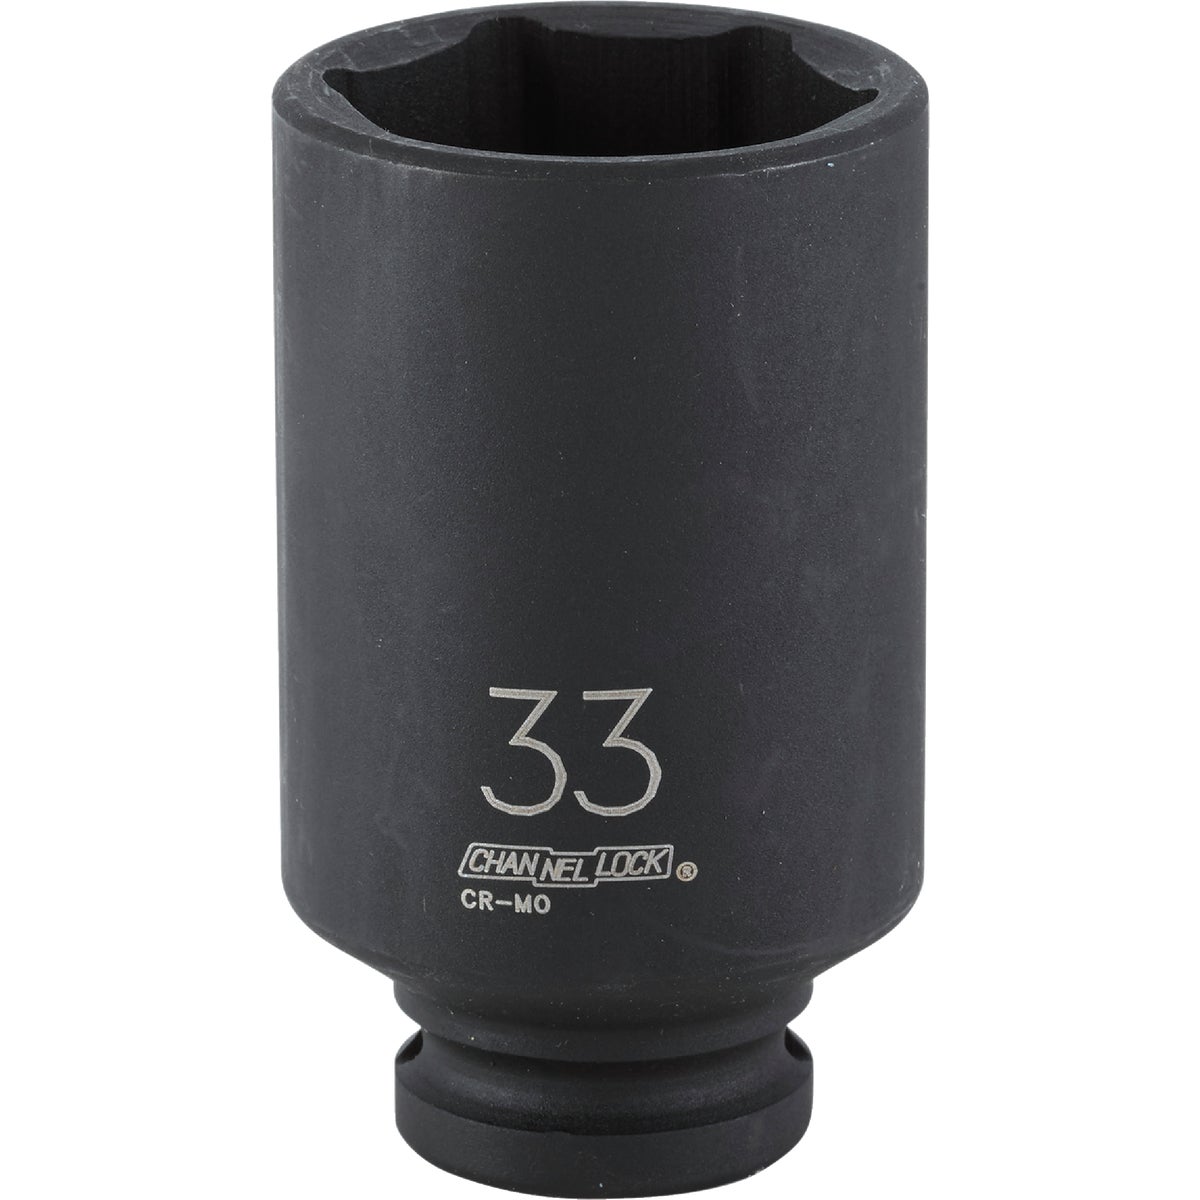 31815 - Williams Metric Socket, Drive: 3/8", Type: Deep Socket, Style: 12 Point, Size: 15mm, Length: 2-1/2"